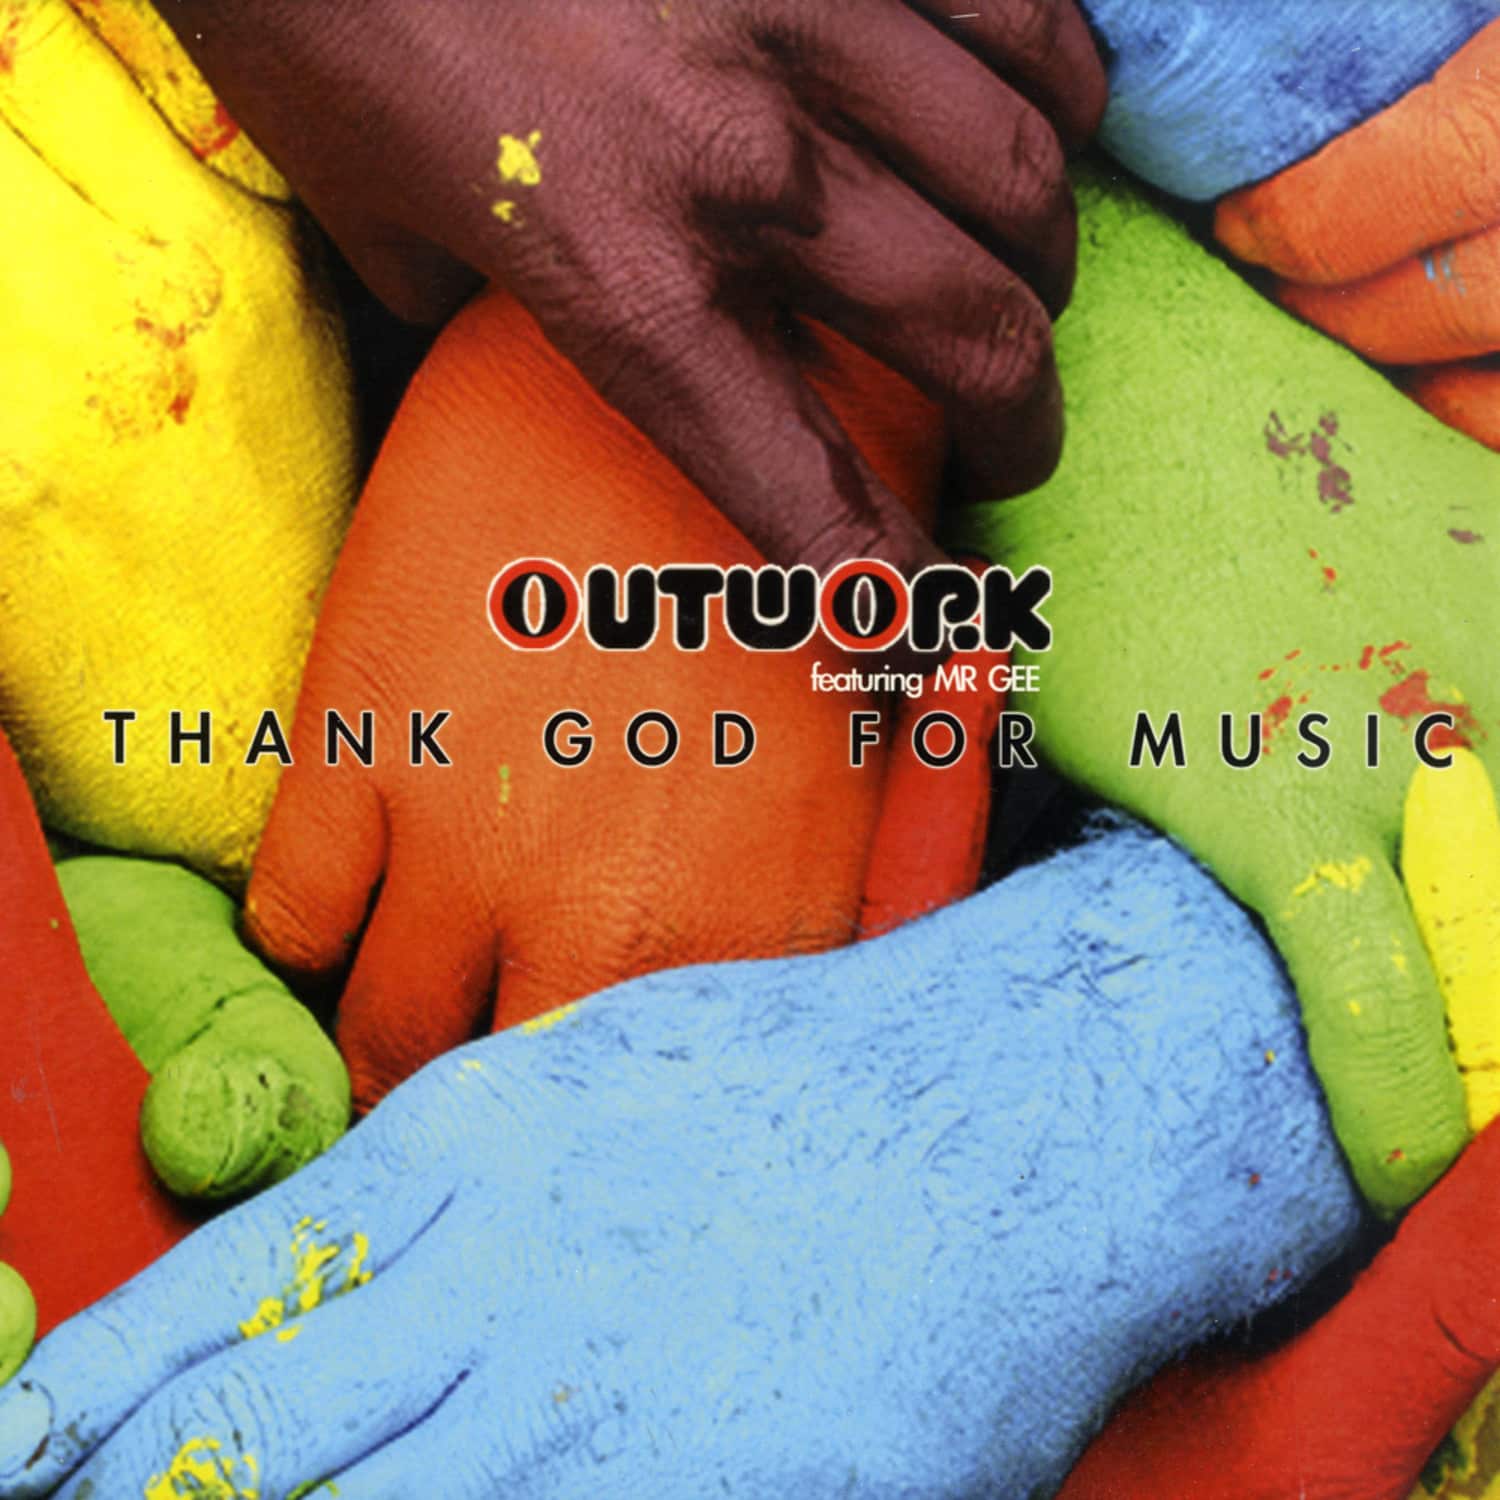 Outwork - THANK GOD FOR MUSIC